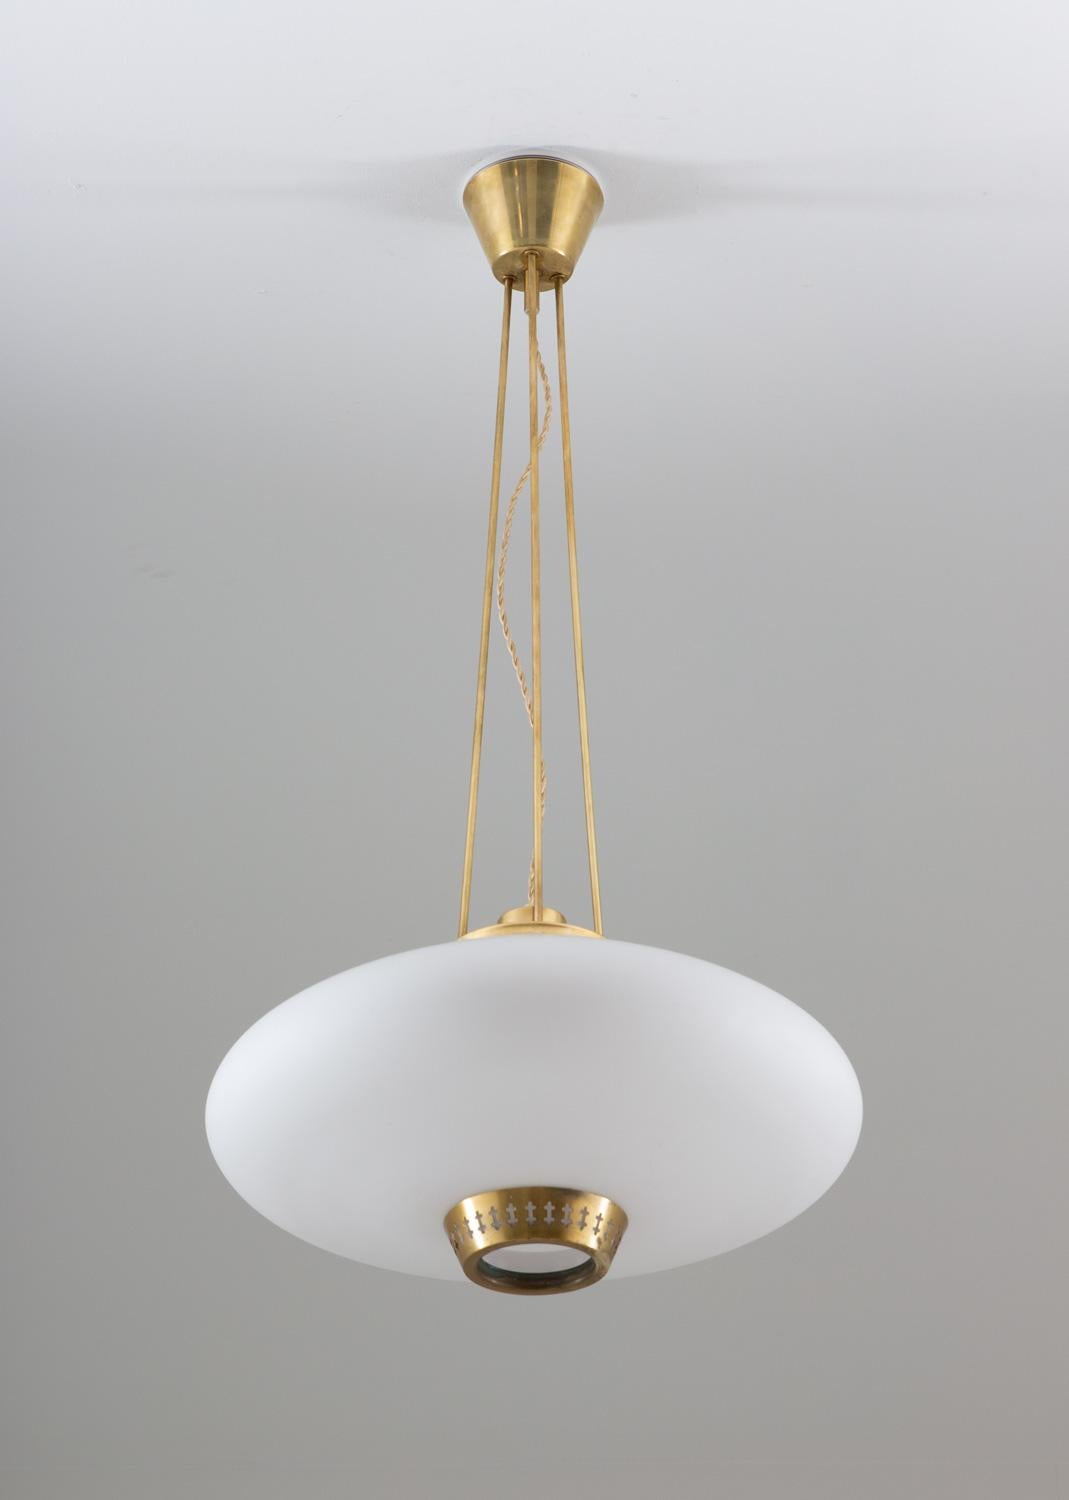 Scandinavian Modern Swedish Midcentury Pendant in Brass and Glass by Hans Bergström for ASEA